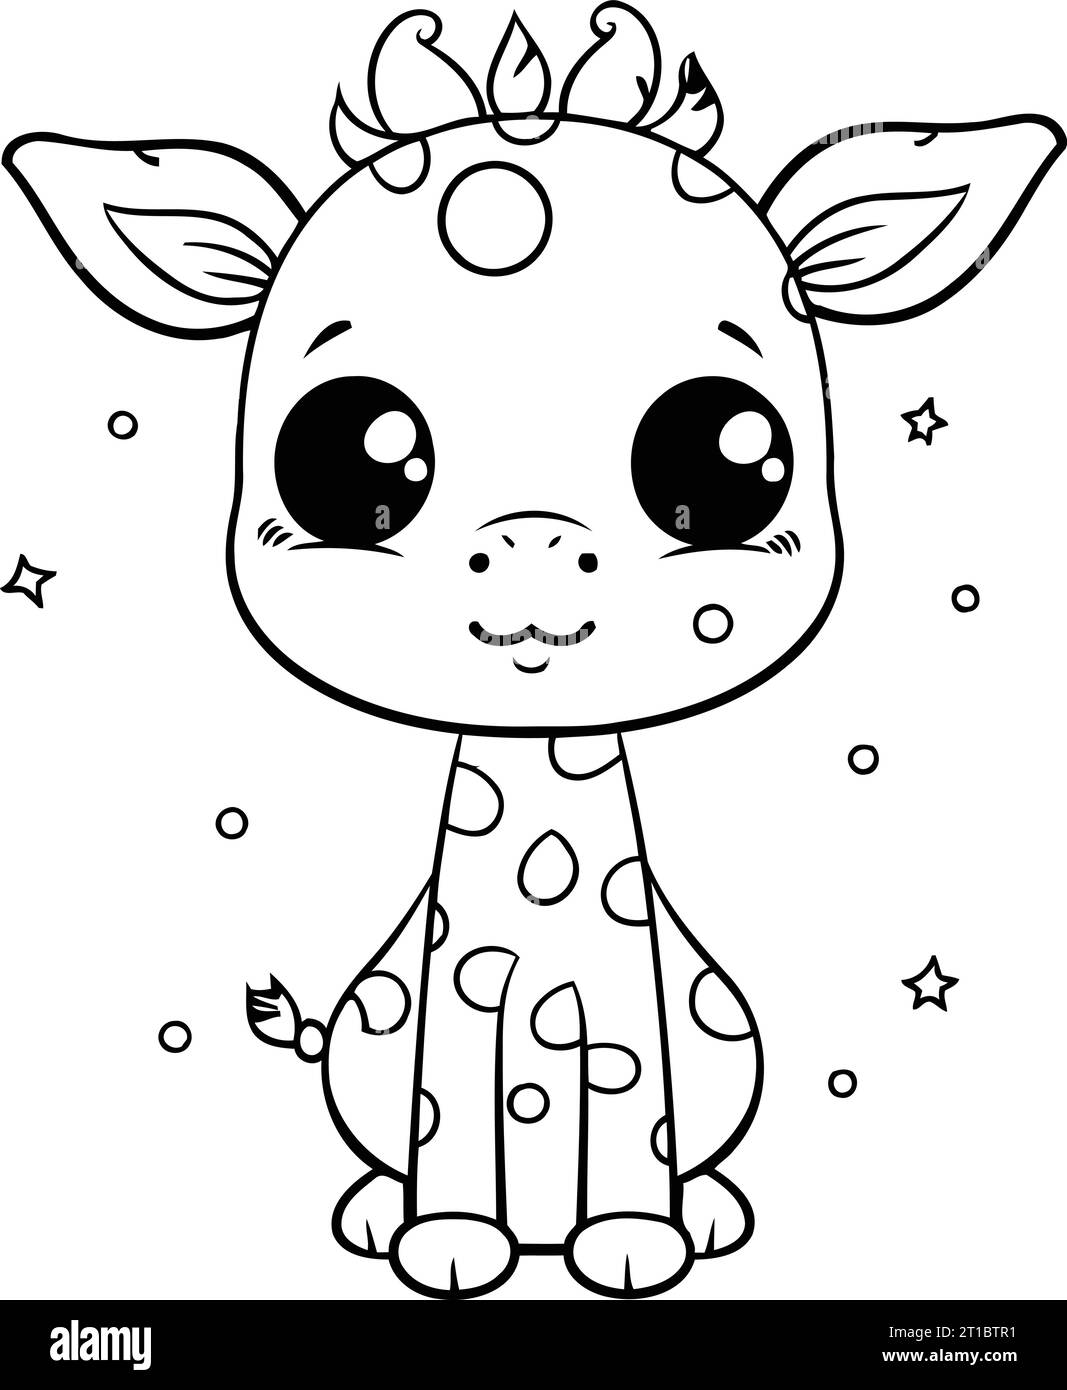 cute little giraffe baby kawaii character vector illustration design Stock Vector